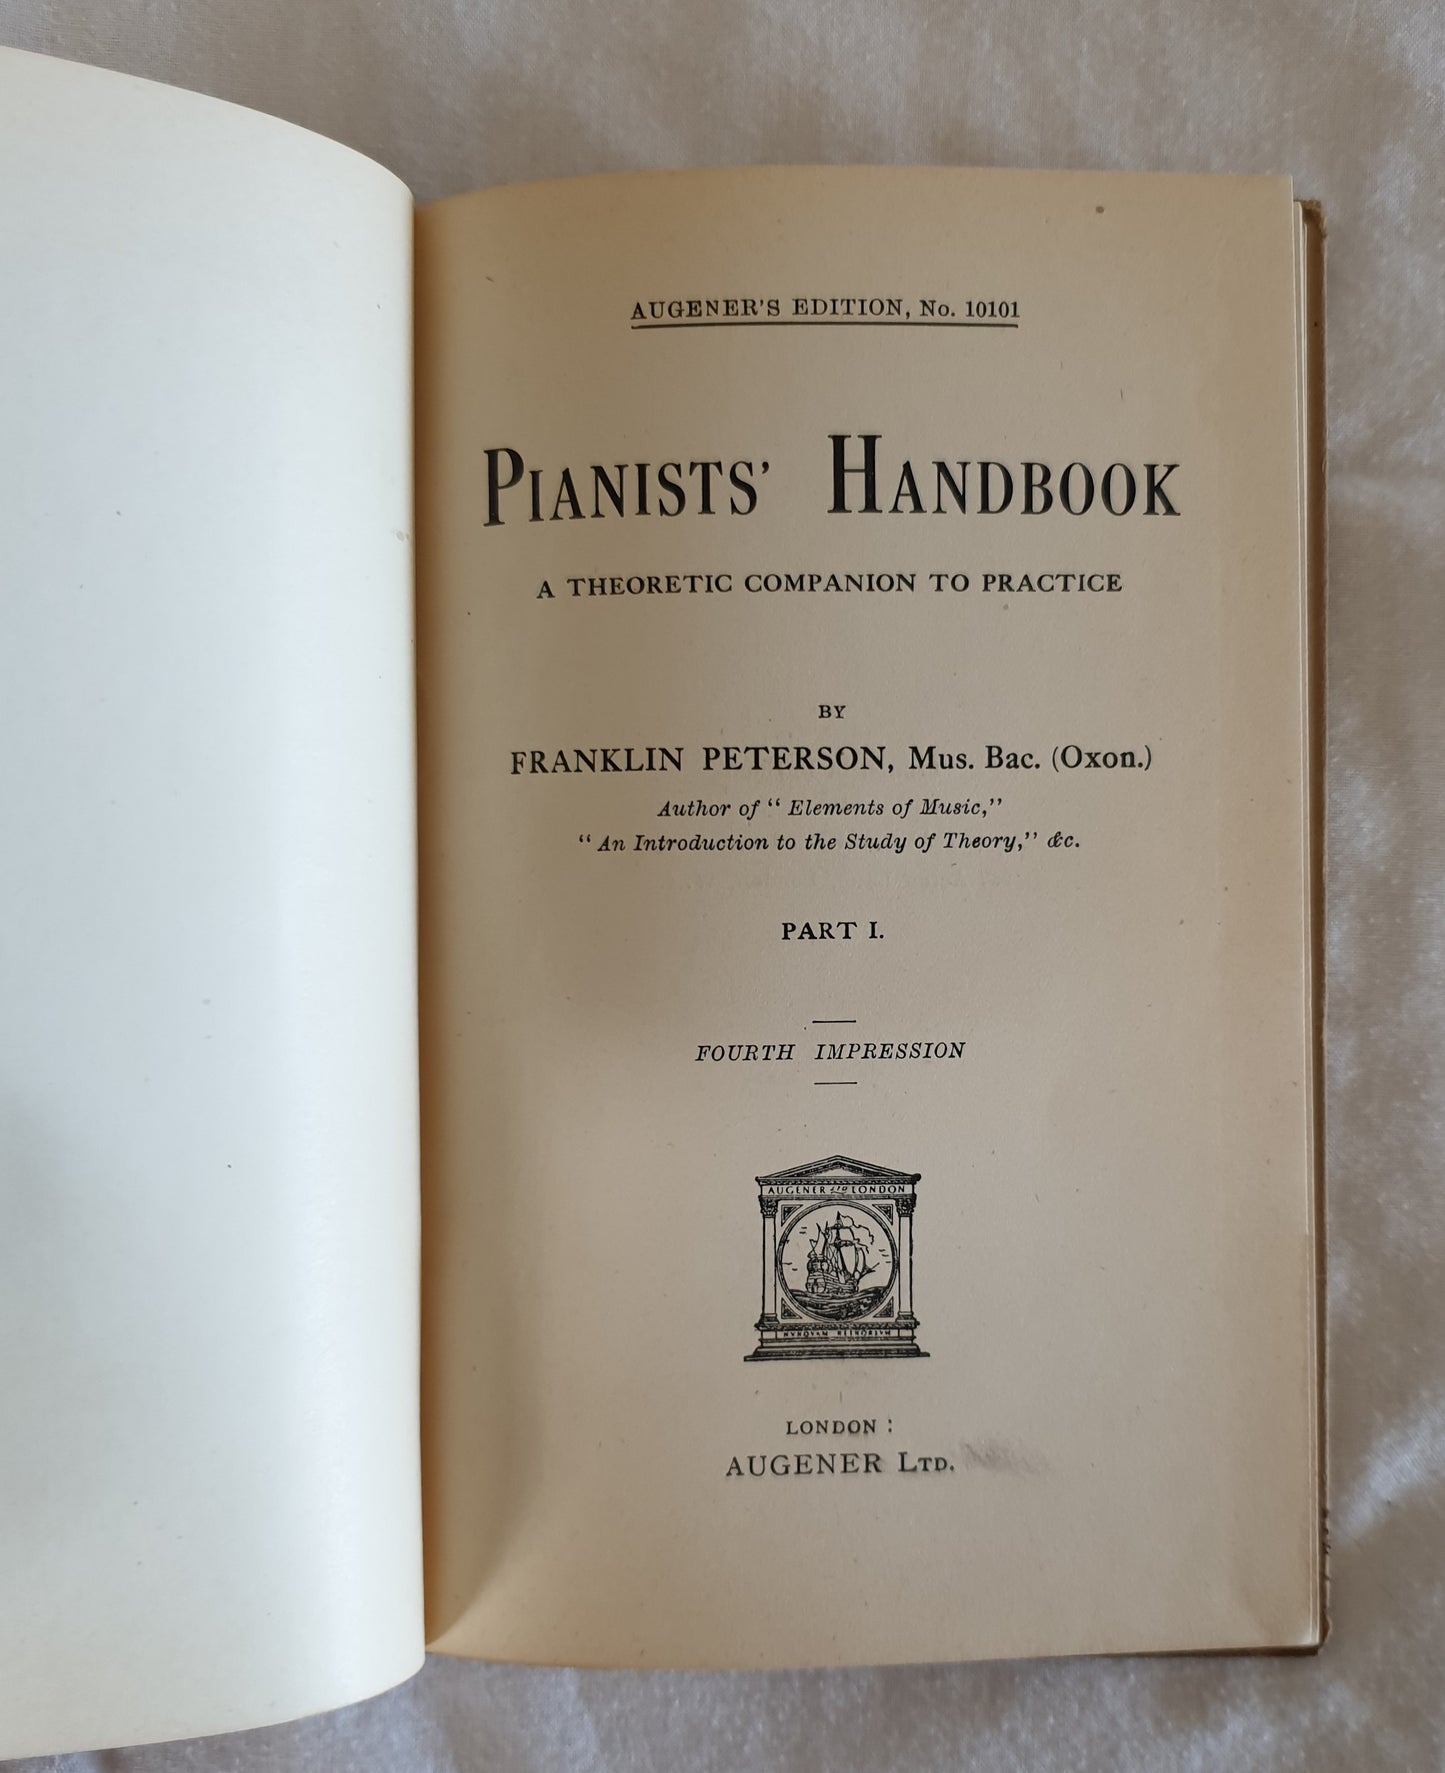 Pianist's Handbook by Franklin Peterson